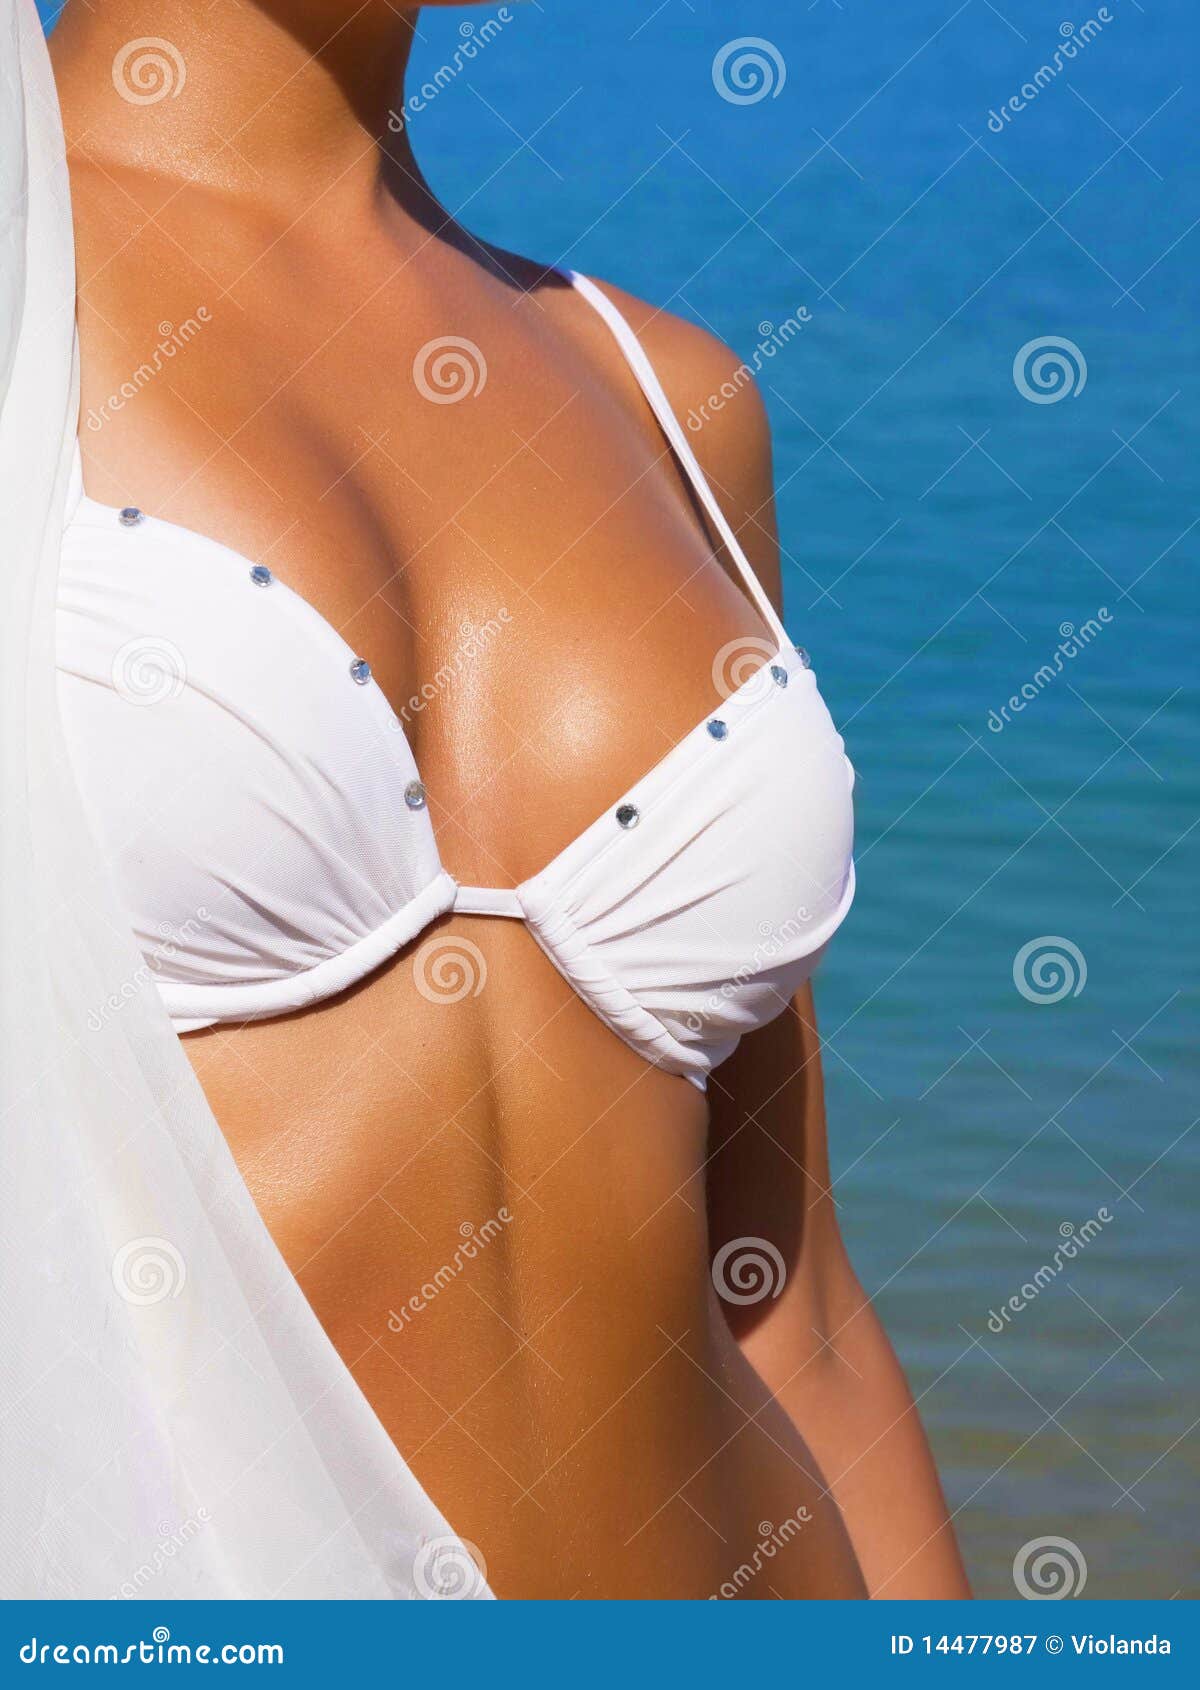 sexual female body on a beach